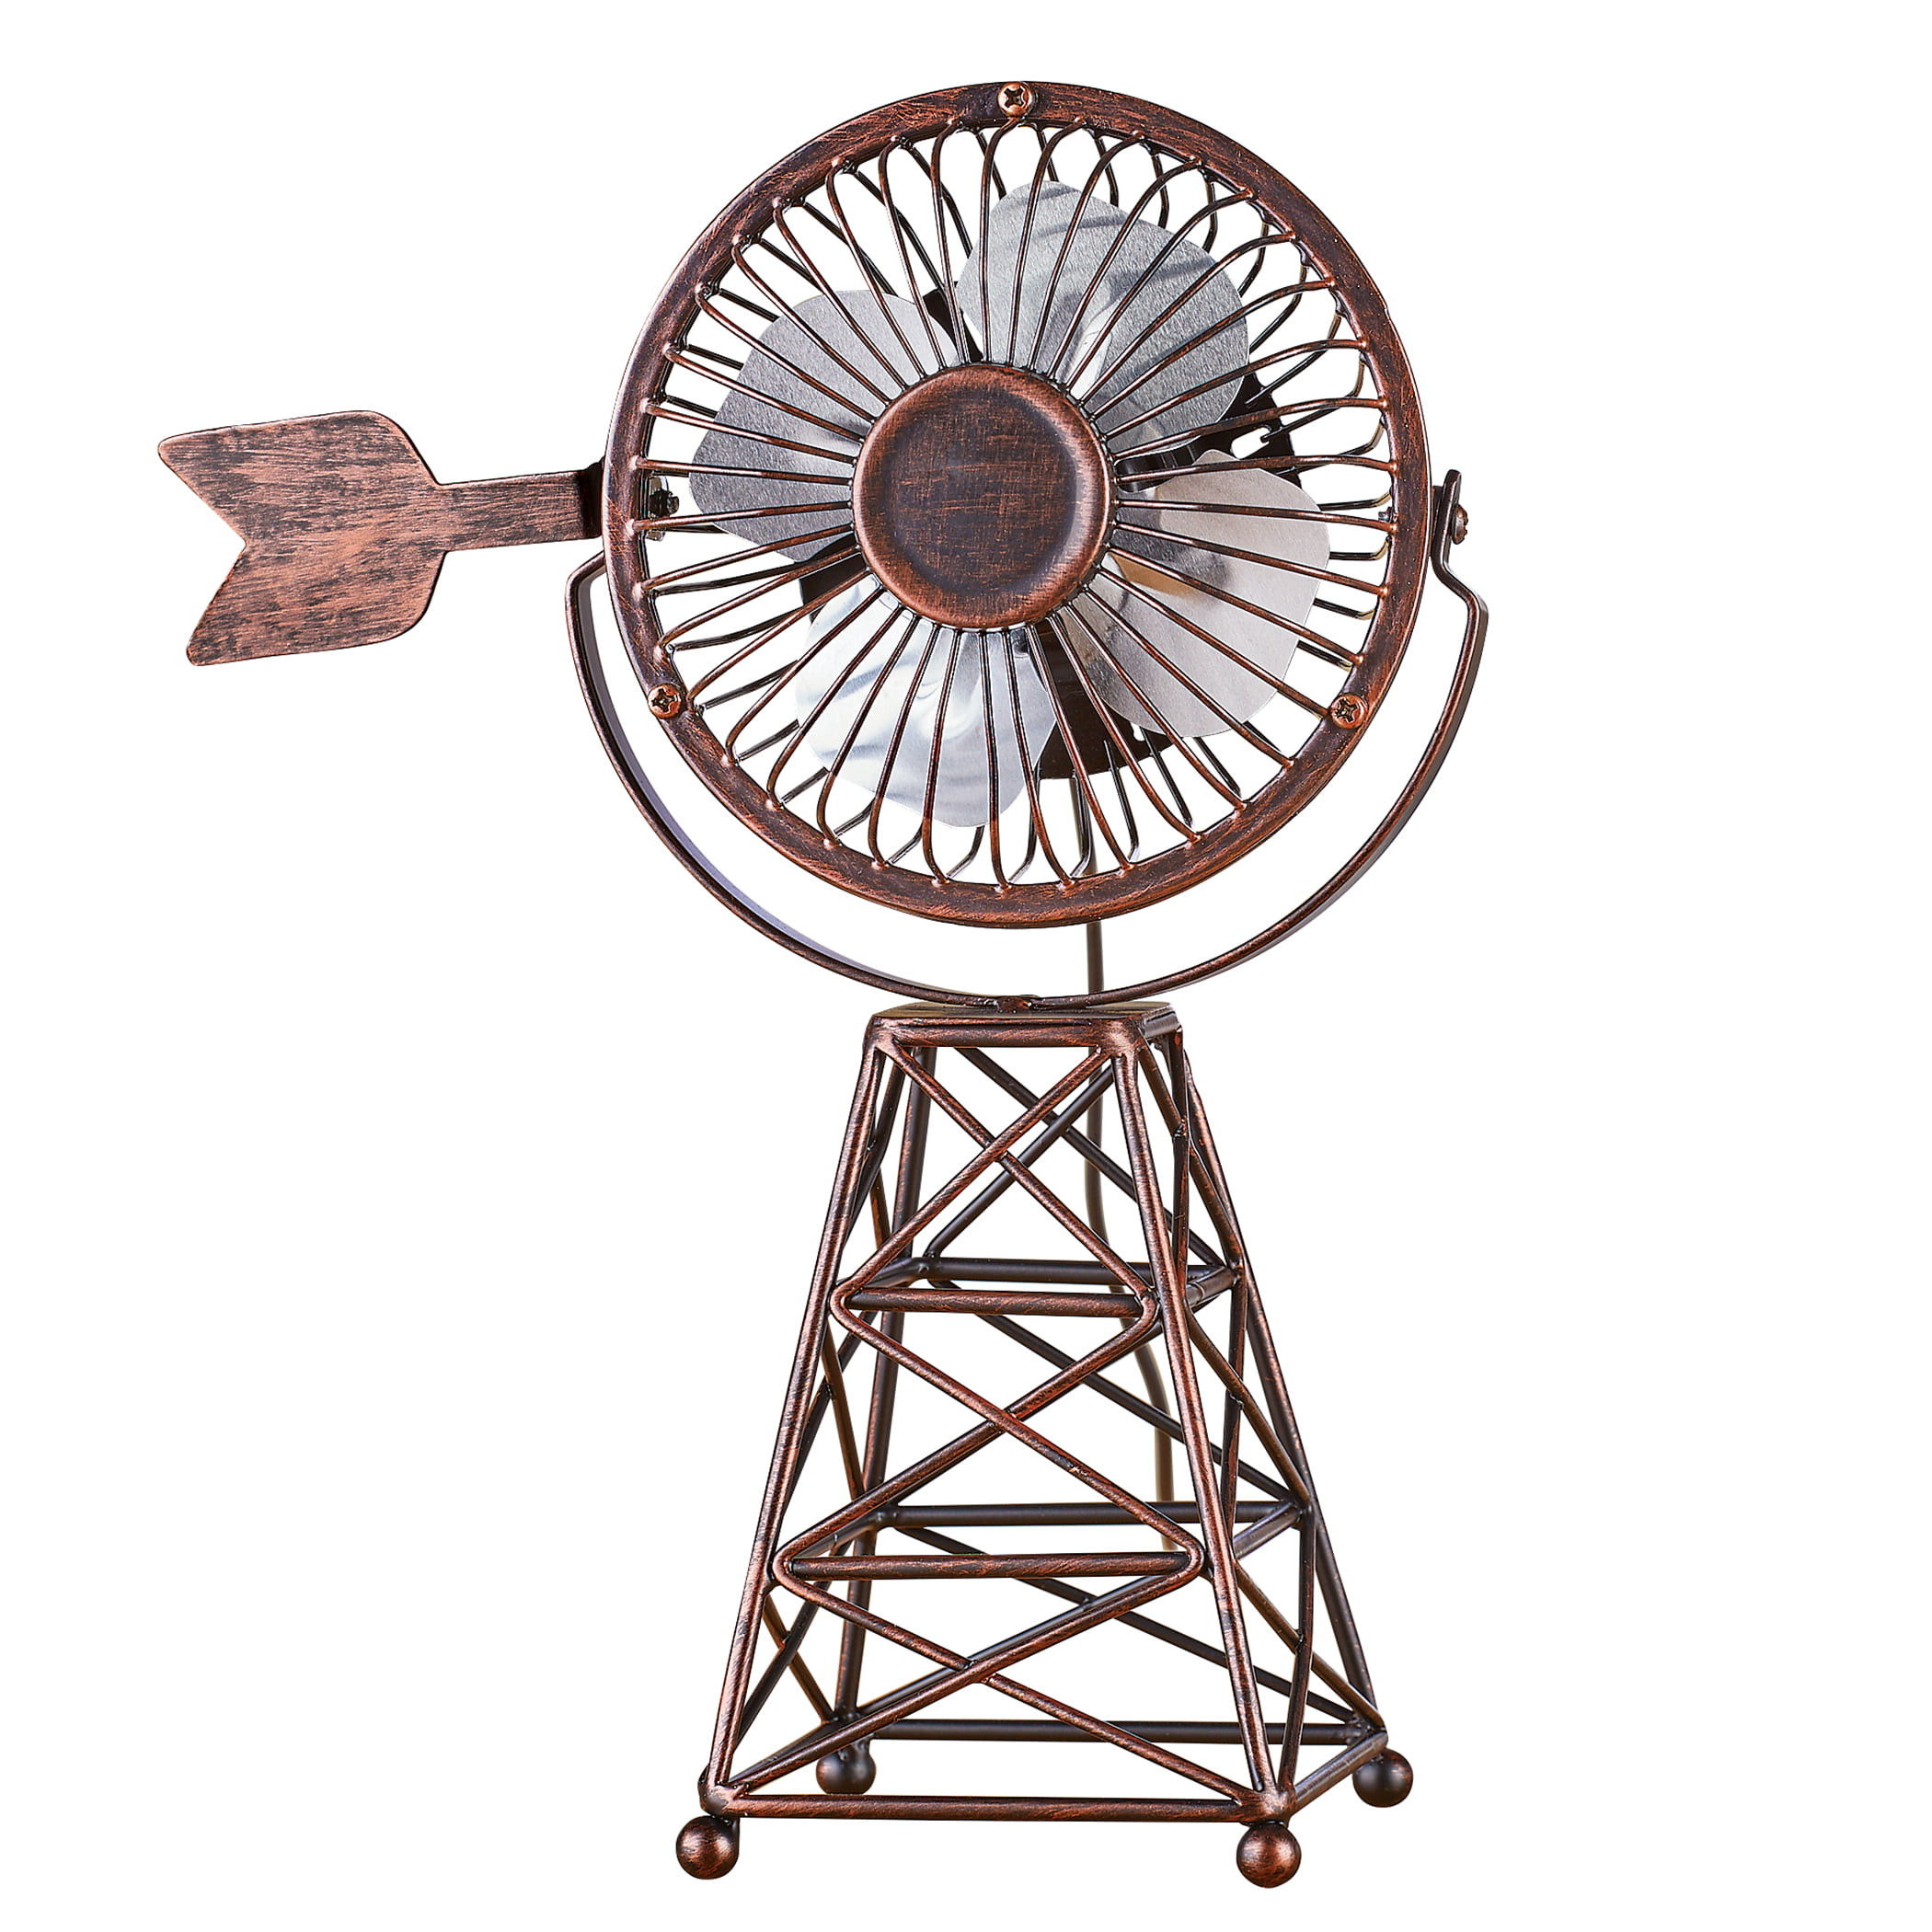 Rustic Farmhouse Appeal Desk Accessory The Lakeside Collection Windmill Themed USB Desktop Fan